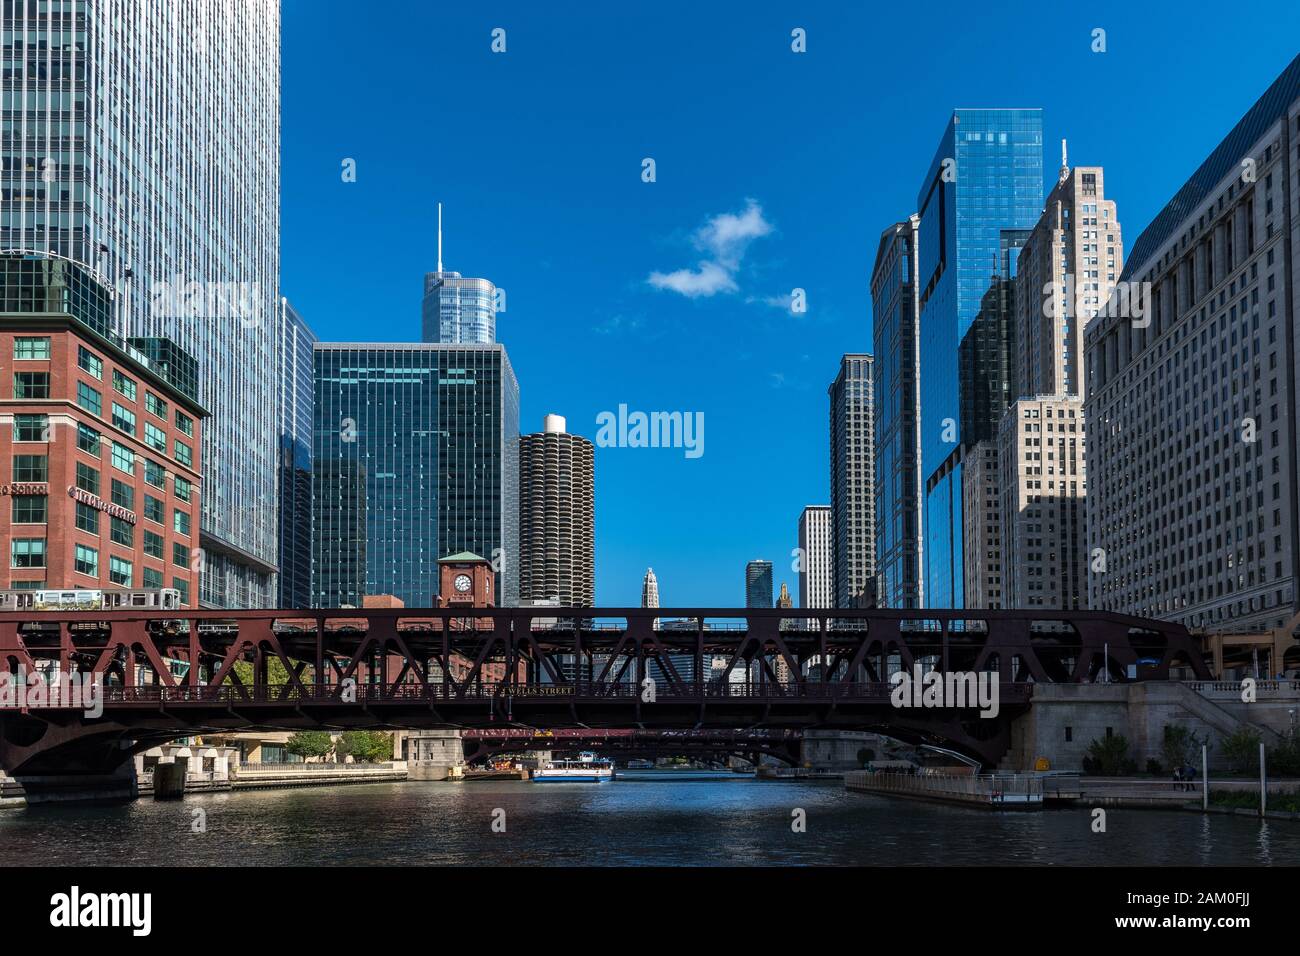 Chicago Architectural Boat Tour 0147 Stockfoto